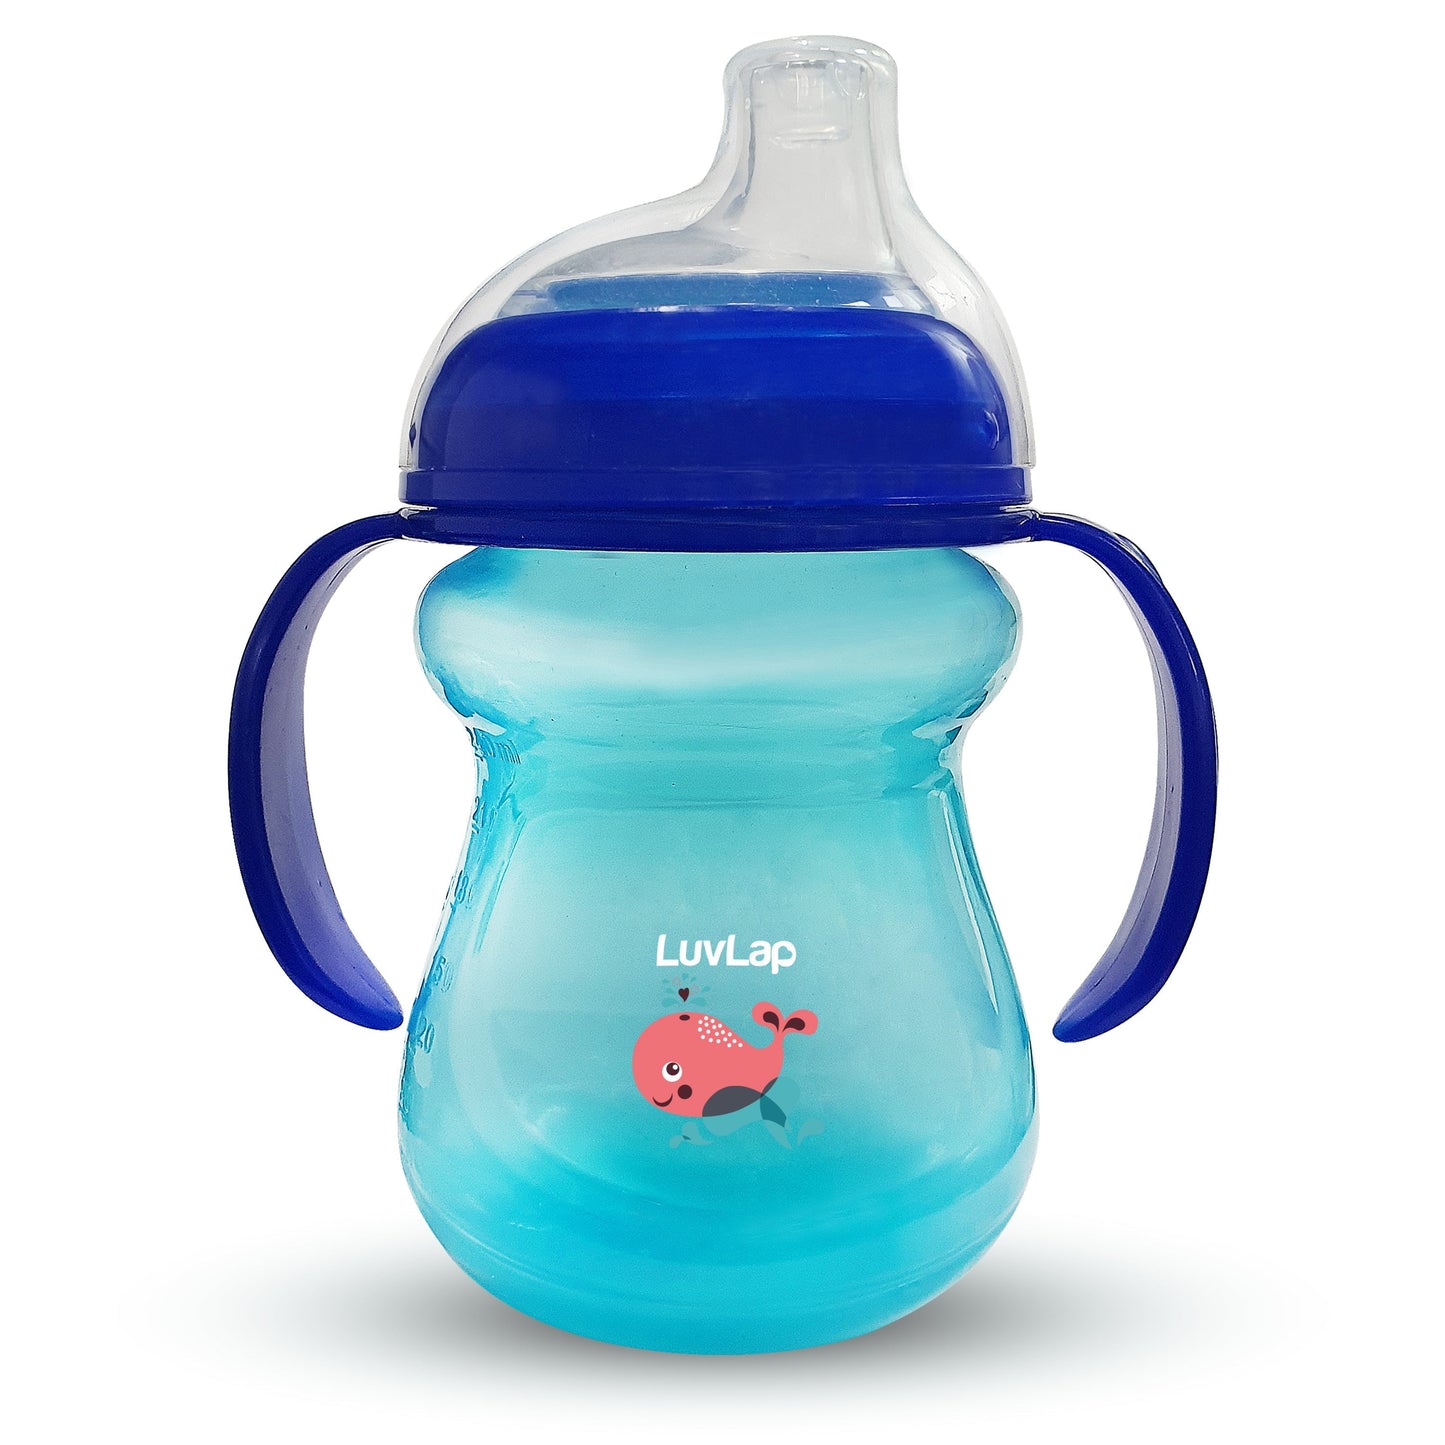 Moby Little Spout Sippy Cup, 240Ml, Blue